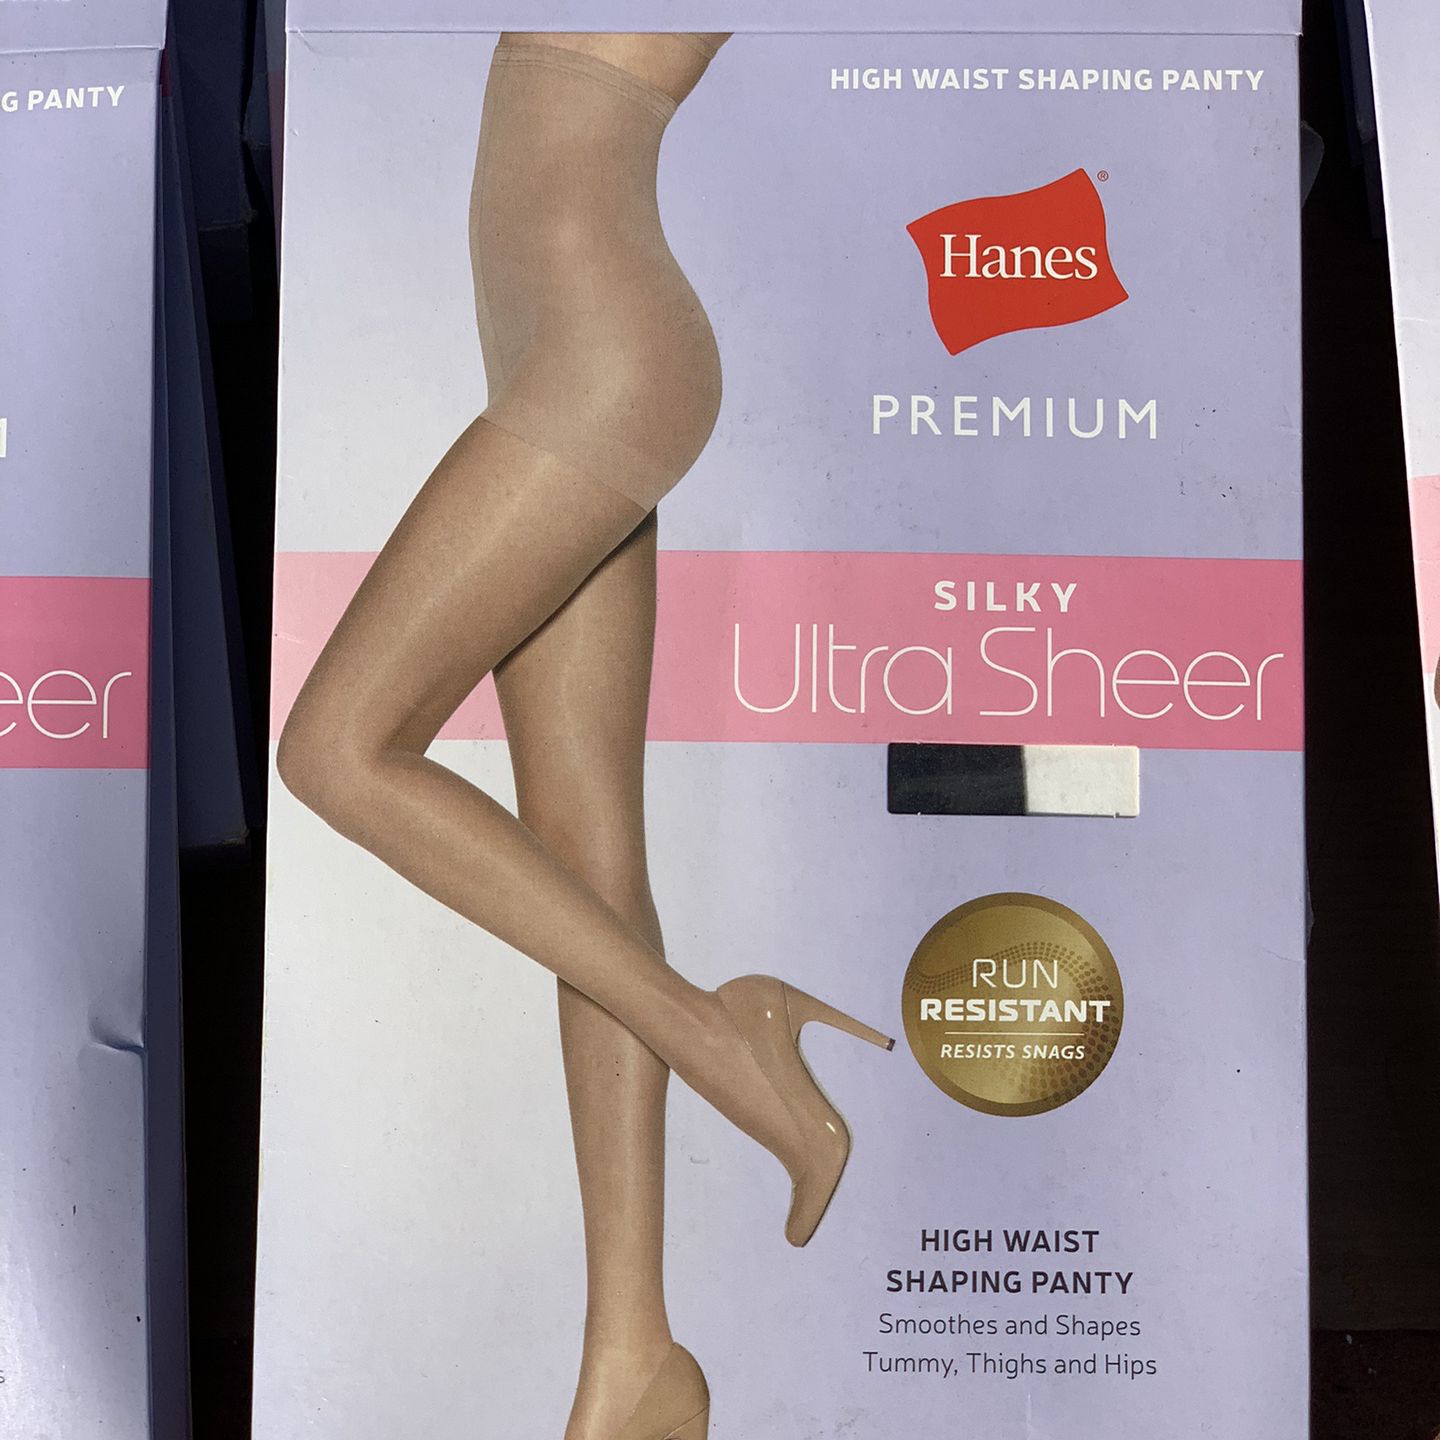 Hanes Premium Women's Sheer High Waist Shaping Pantyhose